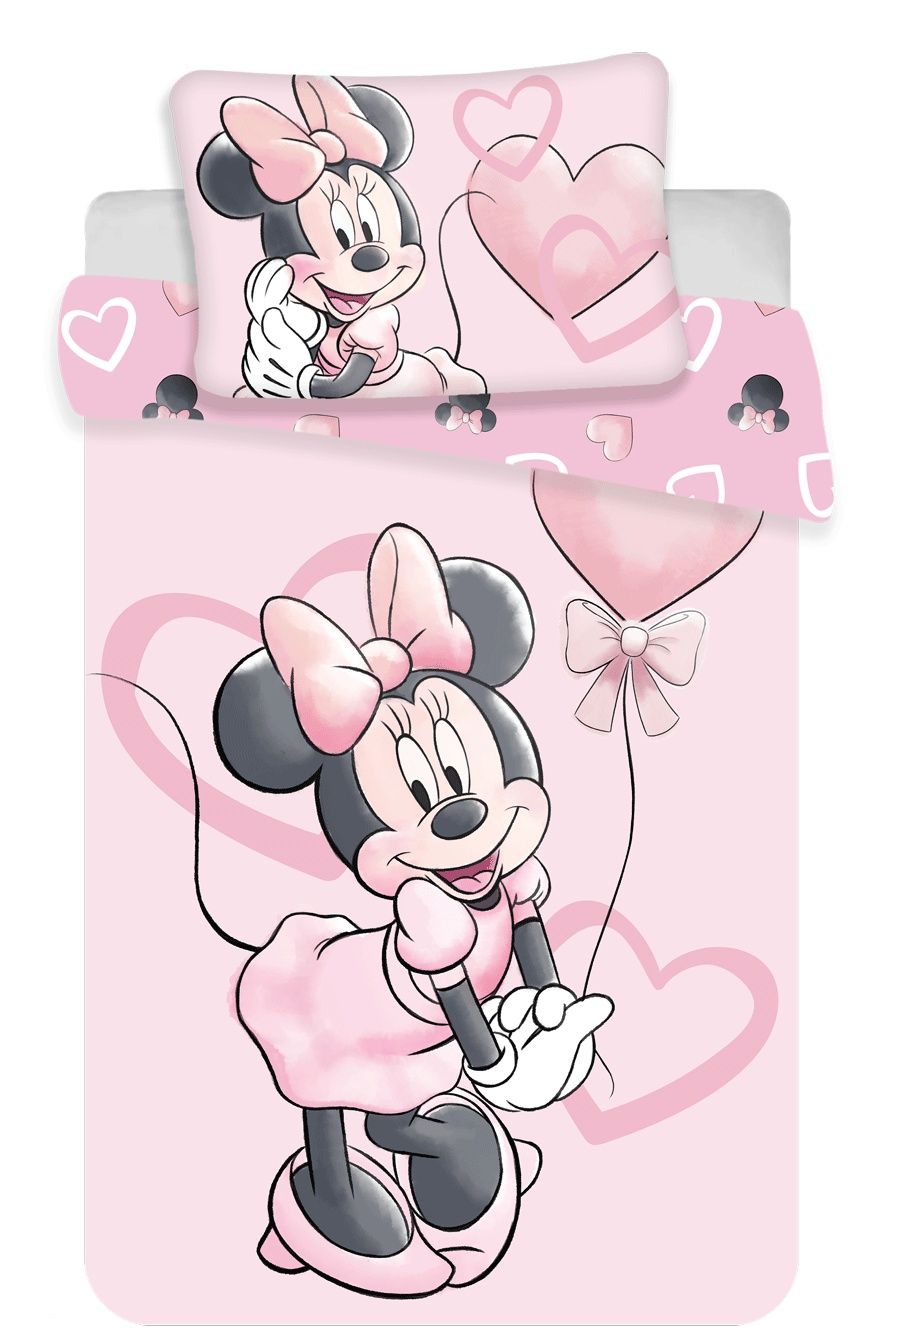 Disney povlečení do postýlky Minnie "Pink heart 02" baby Jerry Fabrics